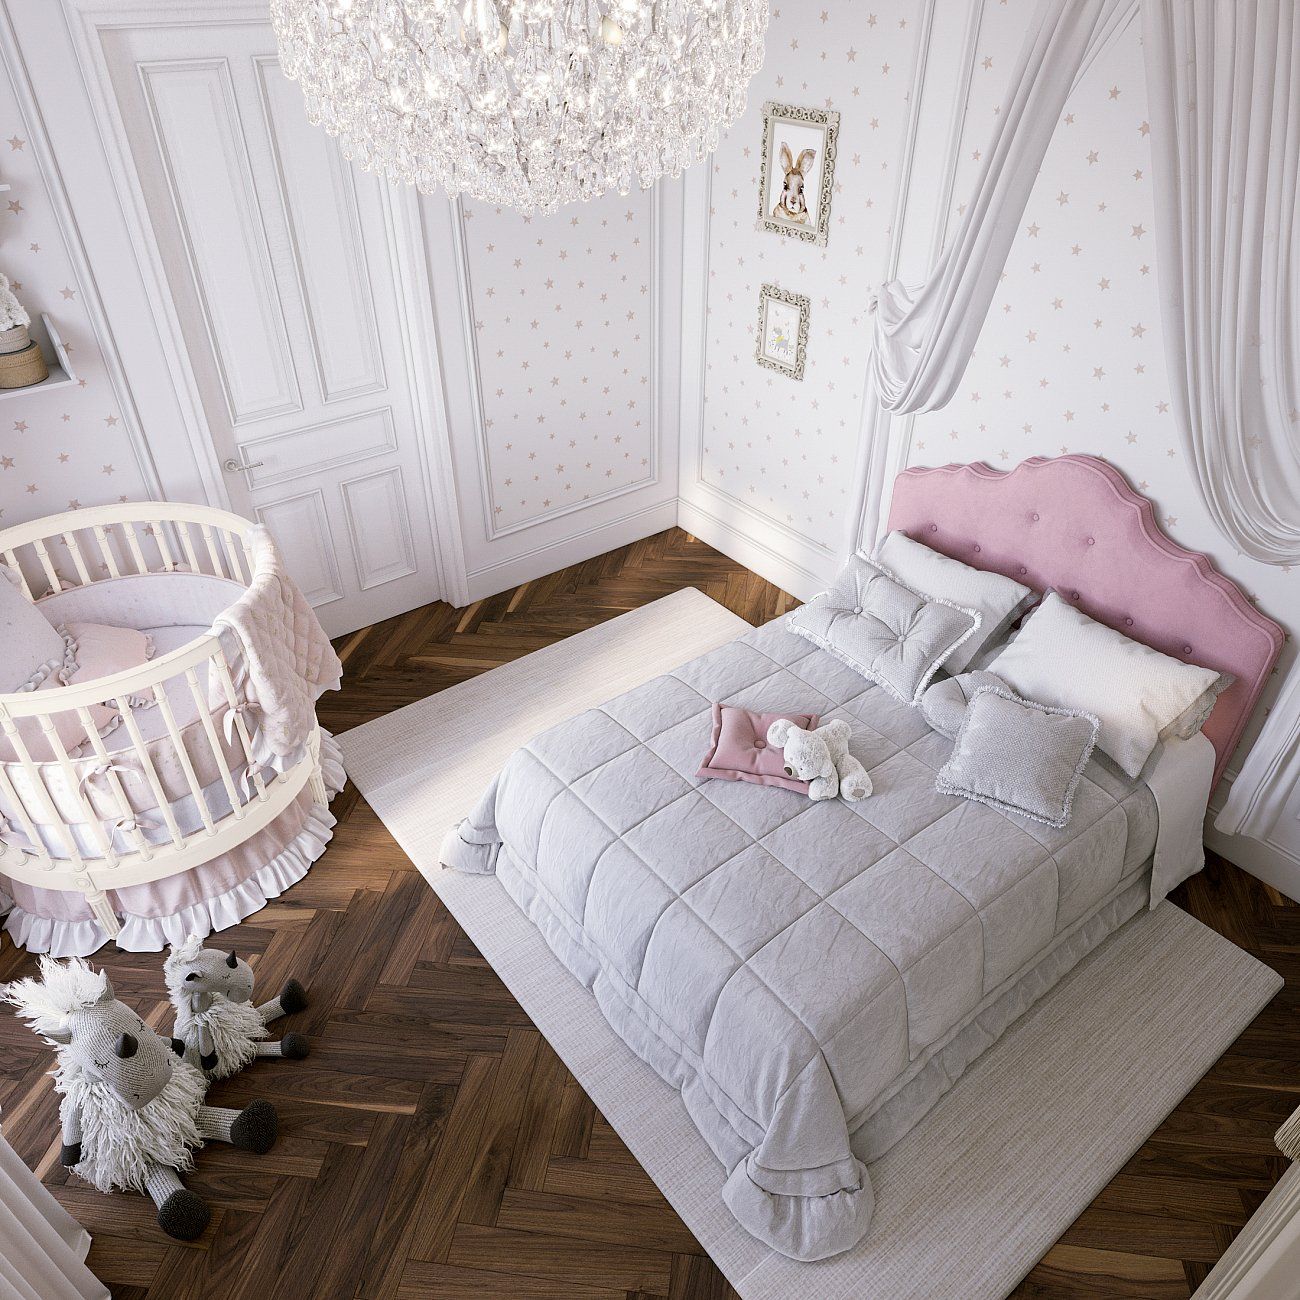 Double bed 180x200 cm beige Palace